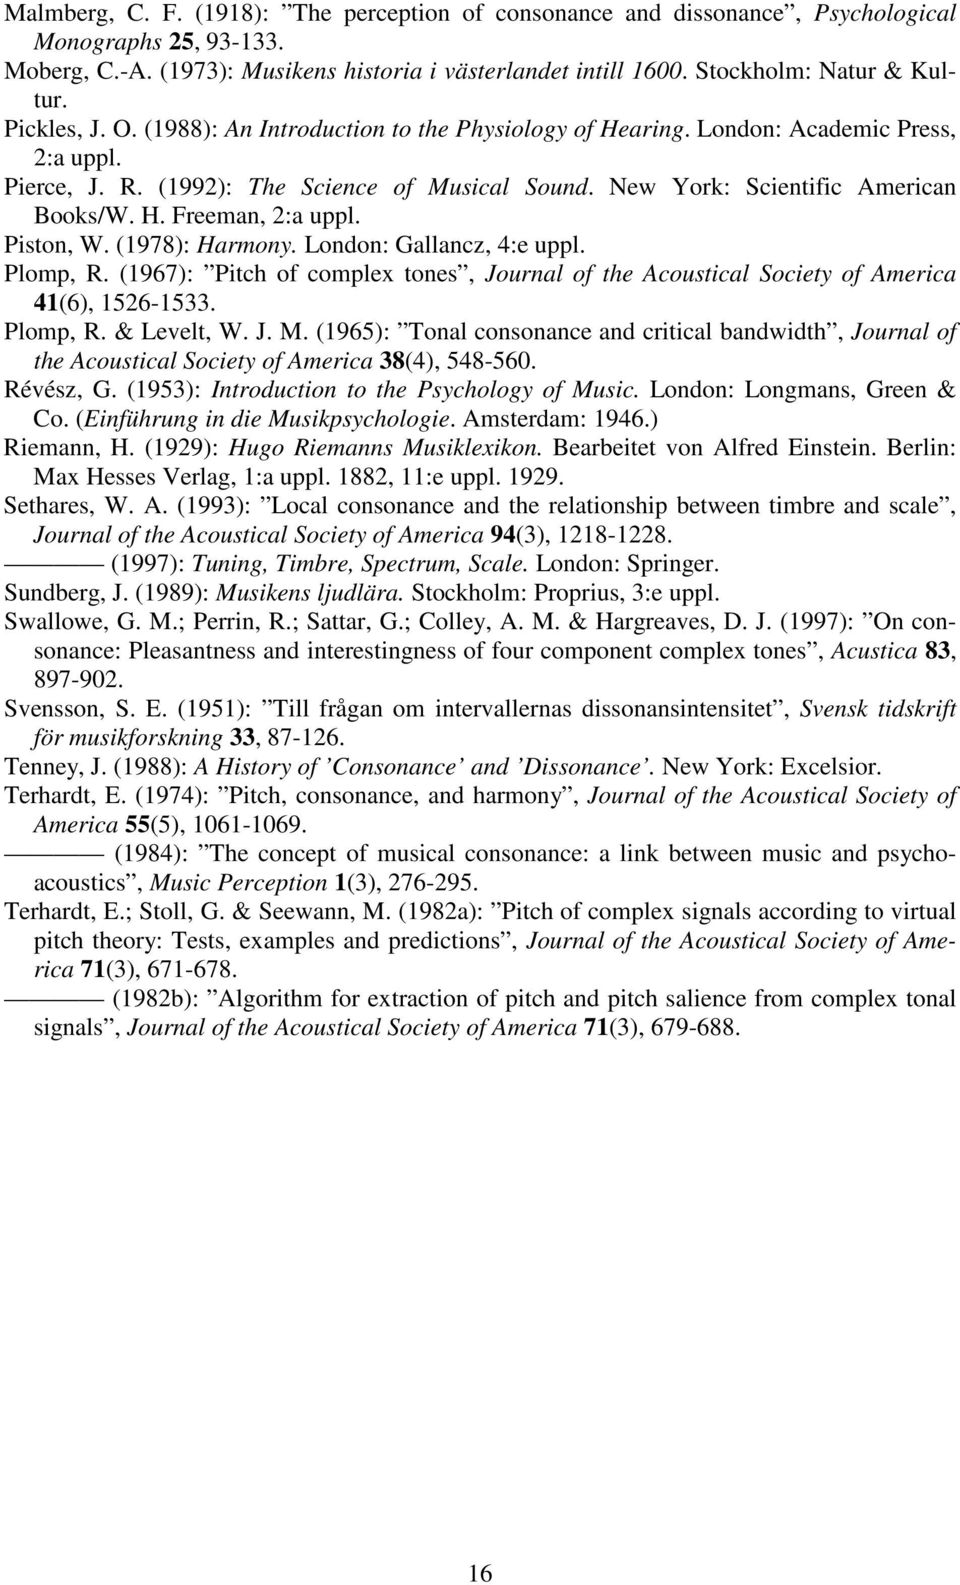 Piston, W. (978): Harmony. London: Gallancz, 4:e uppl. Plomp, R. (967): Pitch of complex tones, Journal of the Acoustical Society of America 4(6), 56-533. Plomp, R. & Levelt, W. J. M.